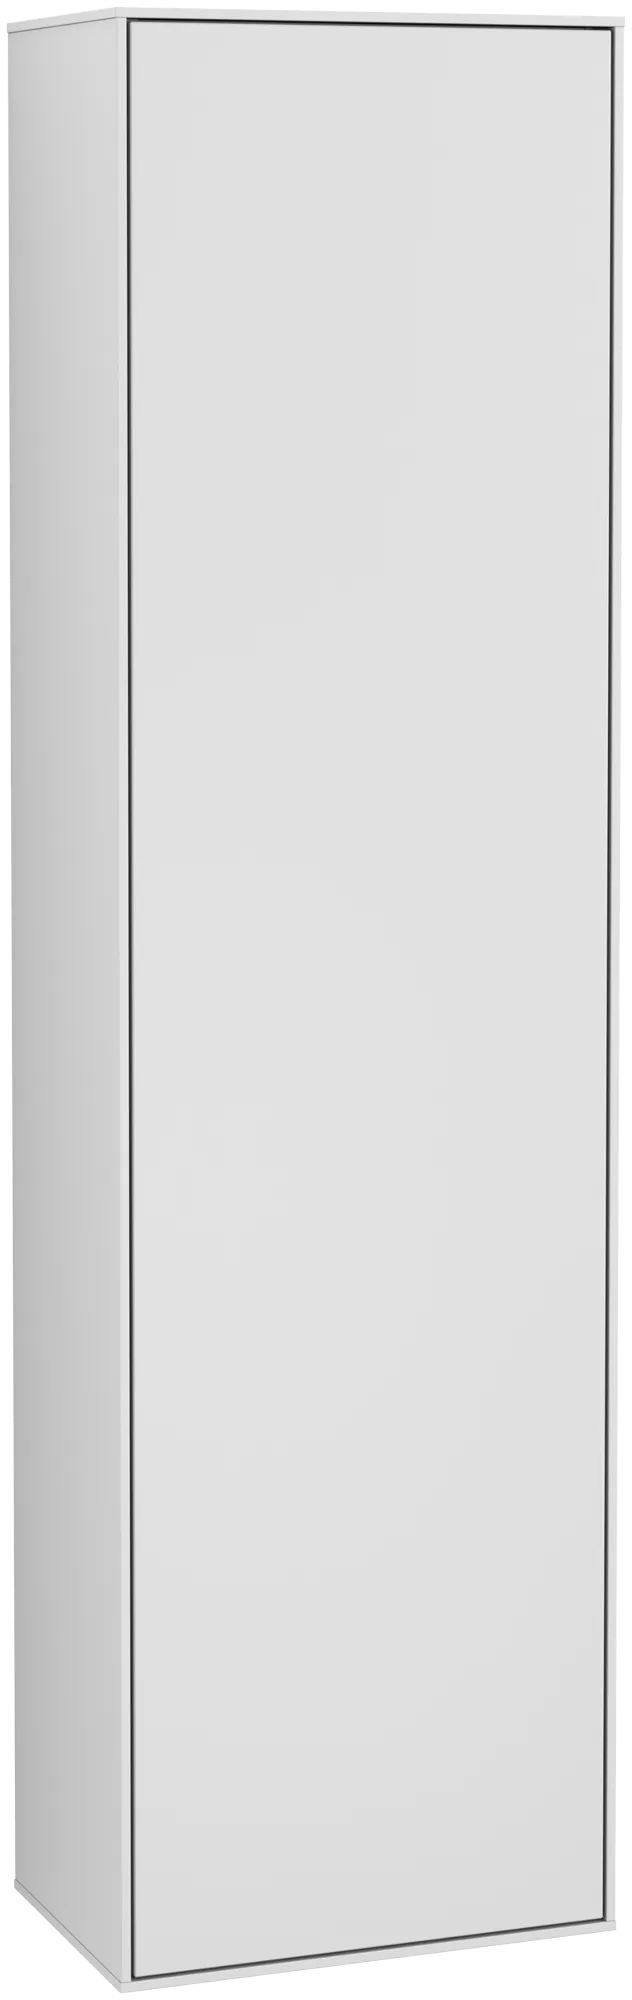 Obrázek VILLEROY BOCH Finion Tall cabinet, with lighting, 1 door, 418 x 1516 x 270 mm, White Matt Lacquer #G49000MT